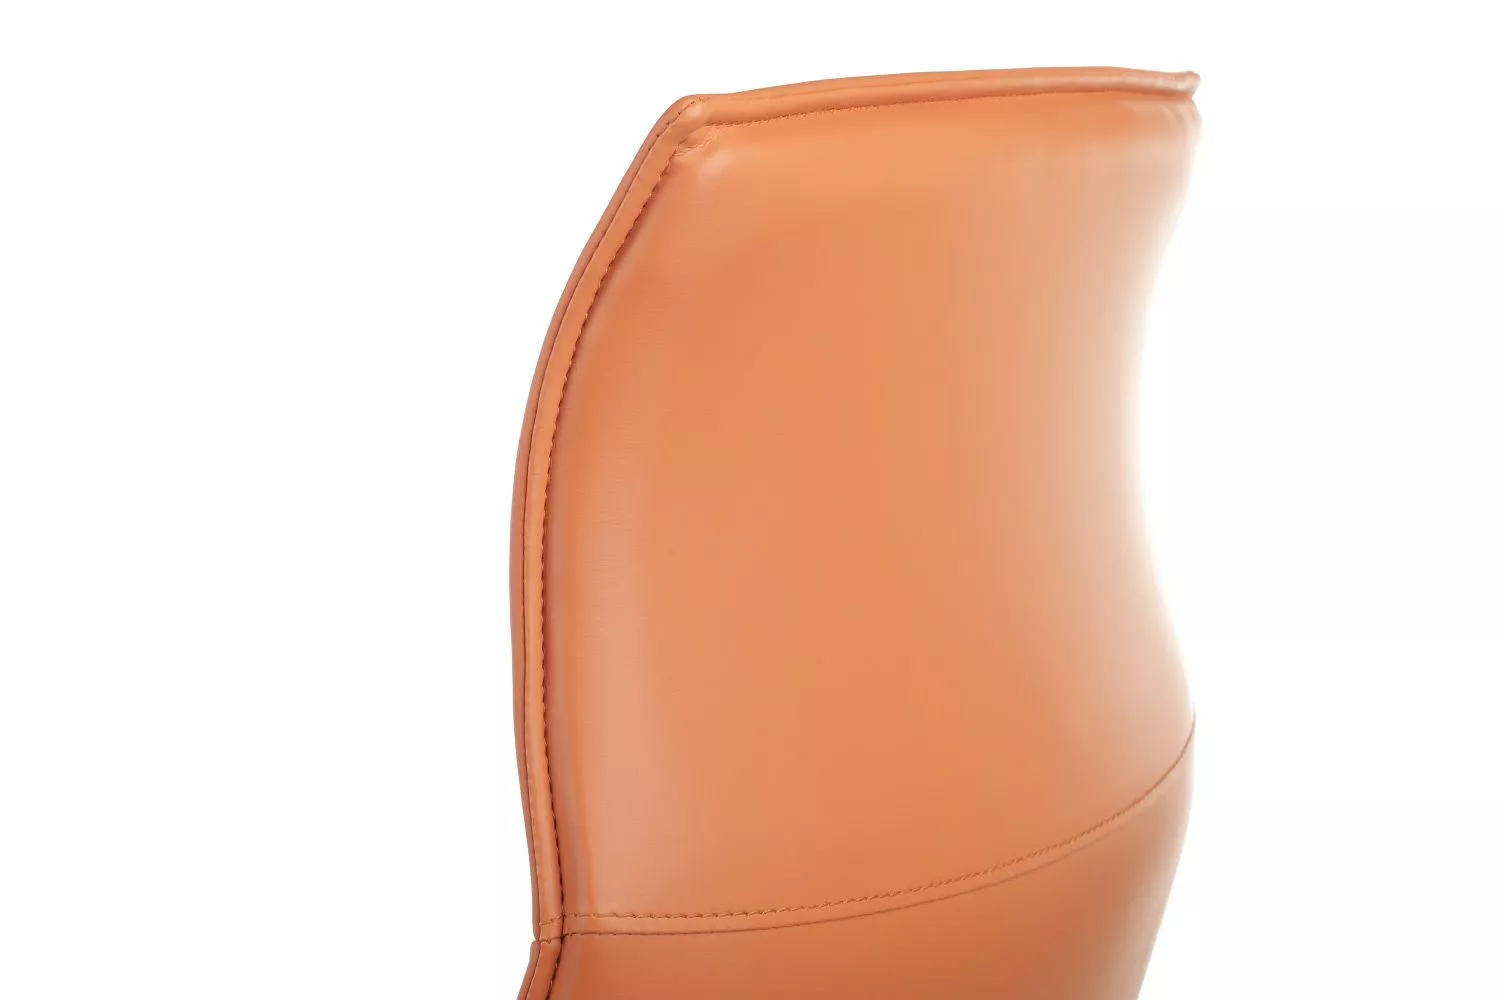 Кресло RIVA DESIGN Rosso (А1918) оранжевый